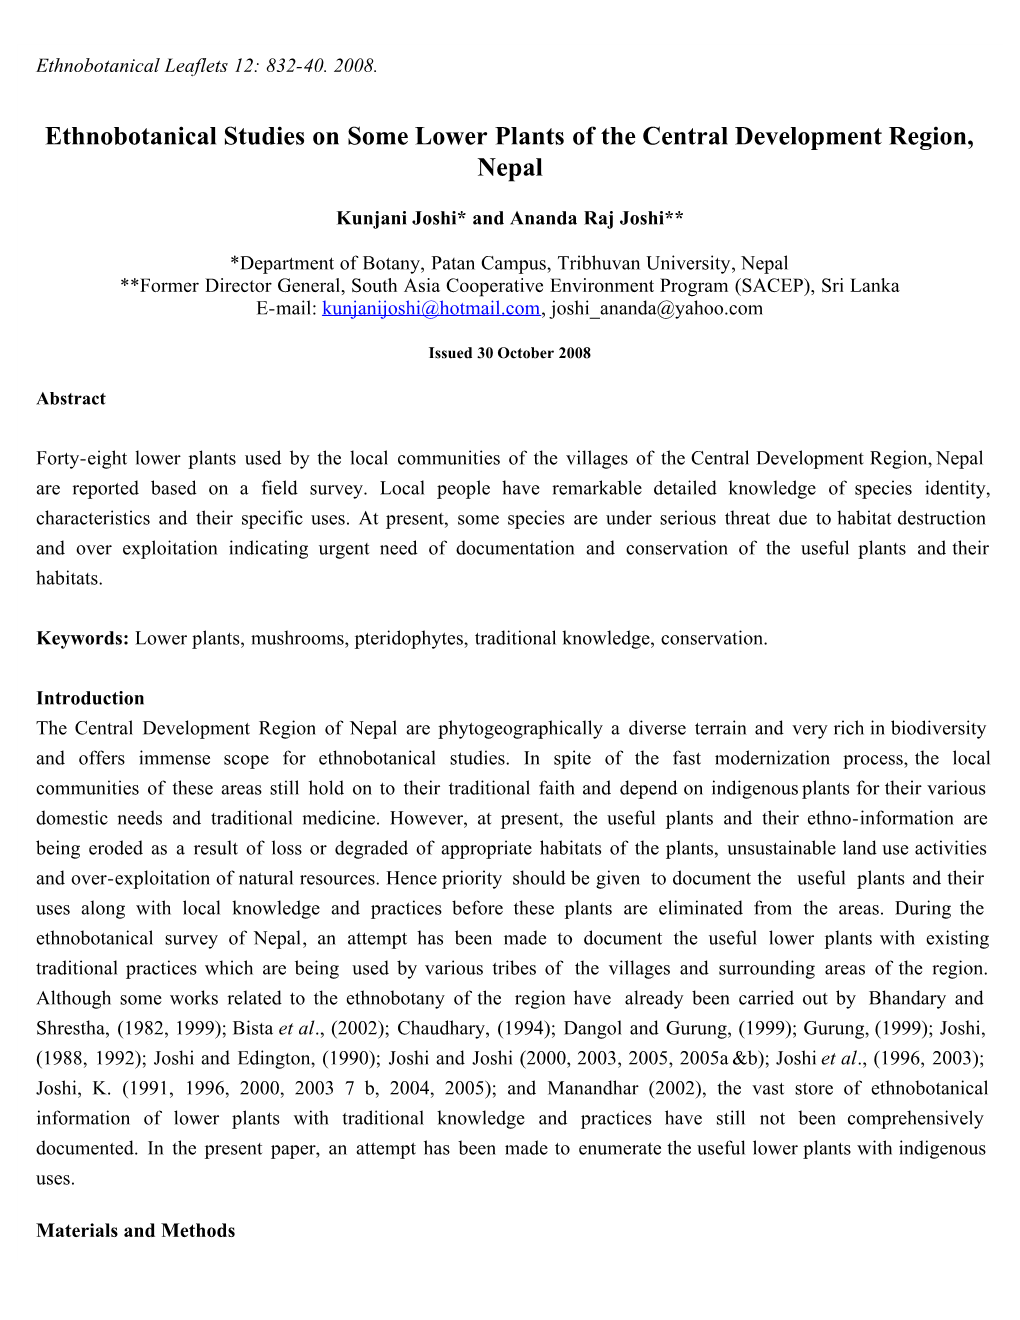 Ethnobotanical Studies on Some Lower Plants of the Central Development Region, Nepal